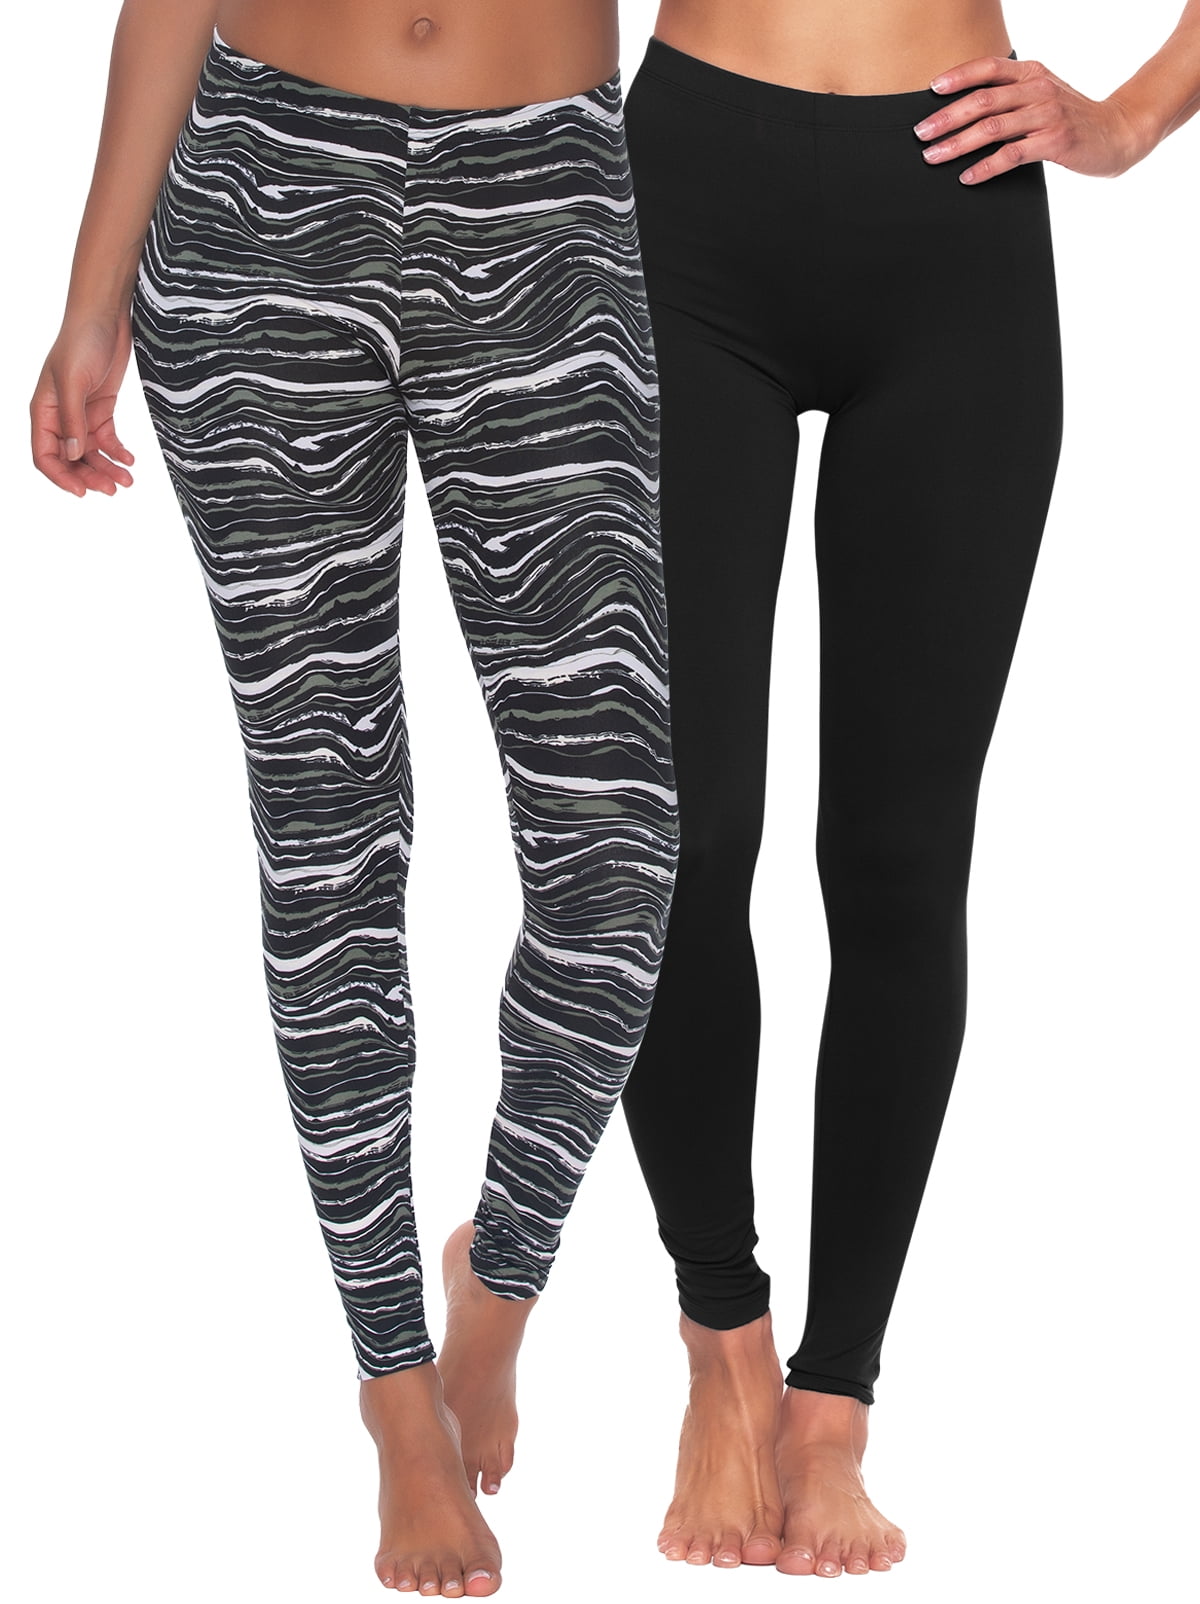 Felina Velvety Super Soft Lightweight Leggings 2-Pack - For Women - Yoga  Pants, Workout Clothes (Black, X-Small) 